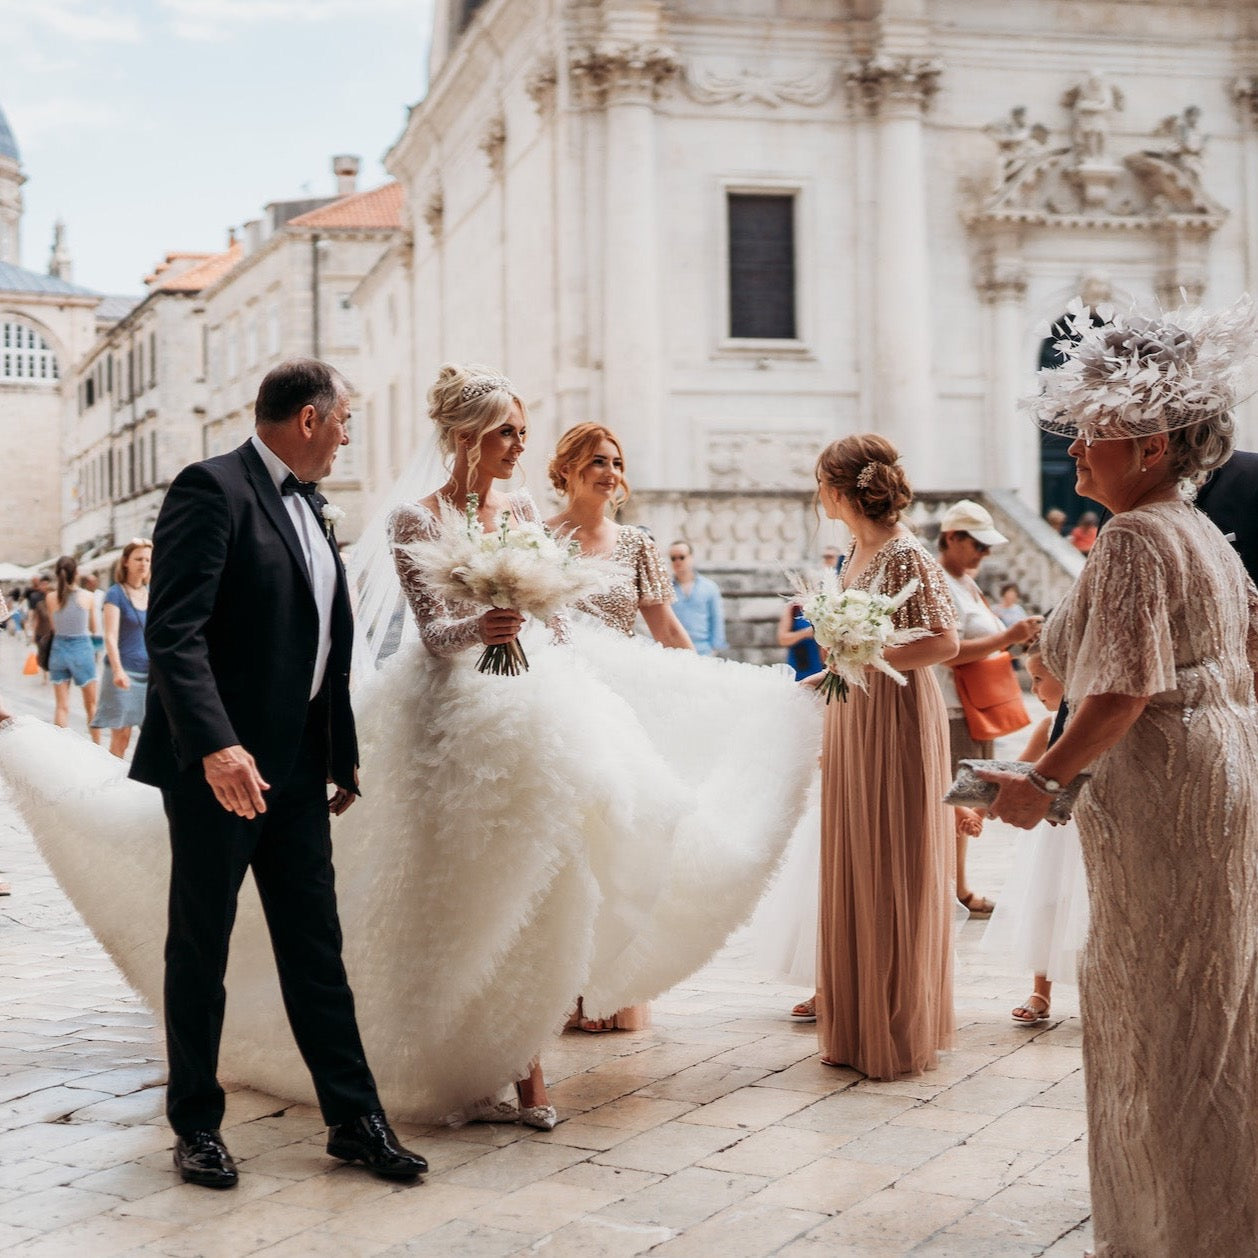 Shoot a wedding with us | Floriana, Malta - Photo & Cinema